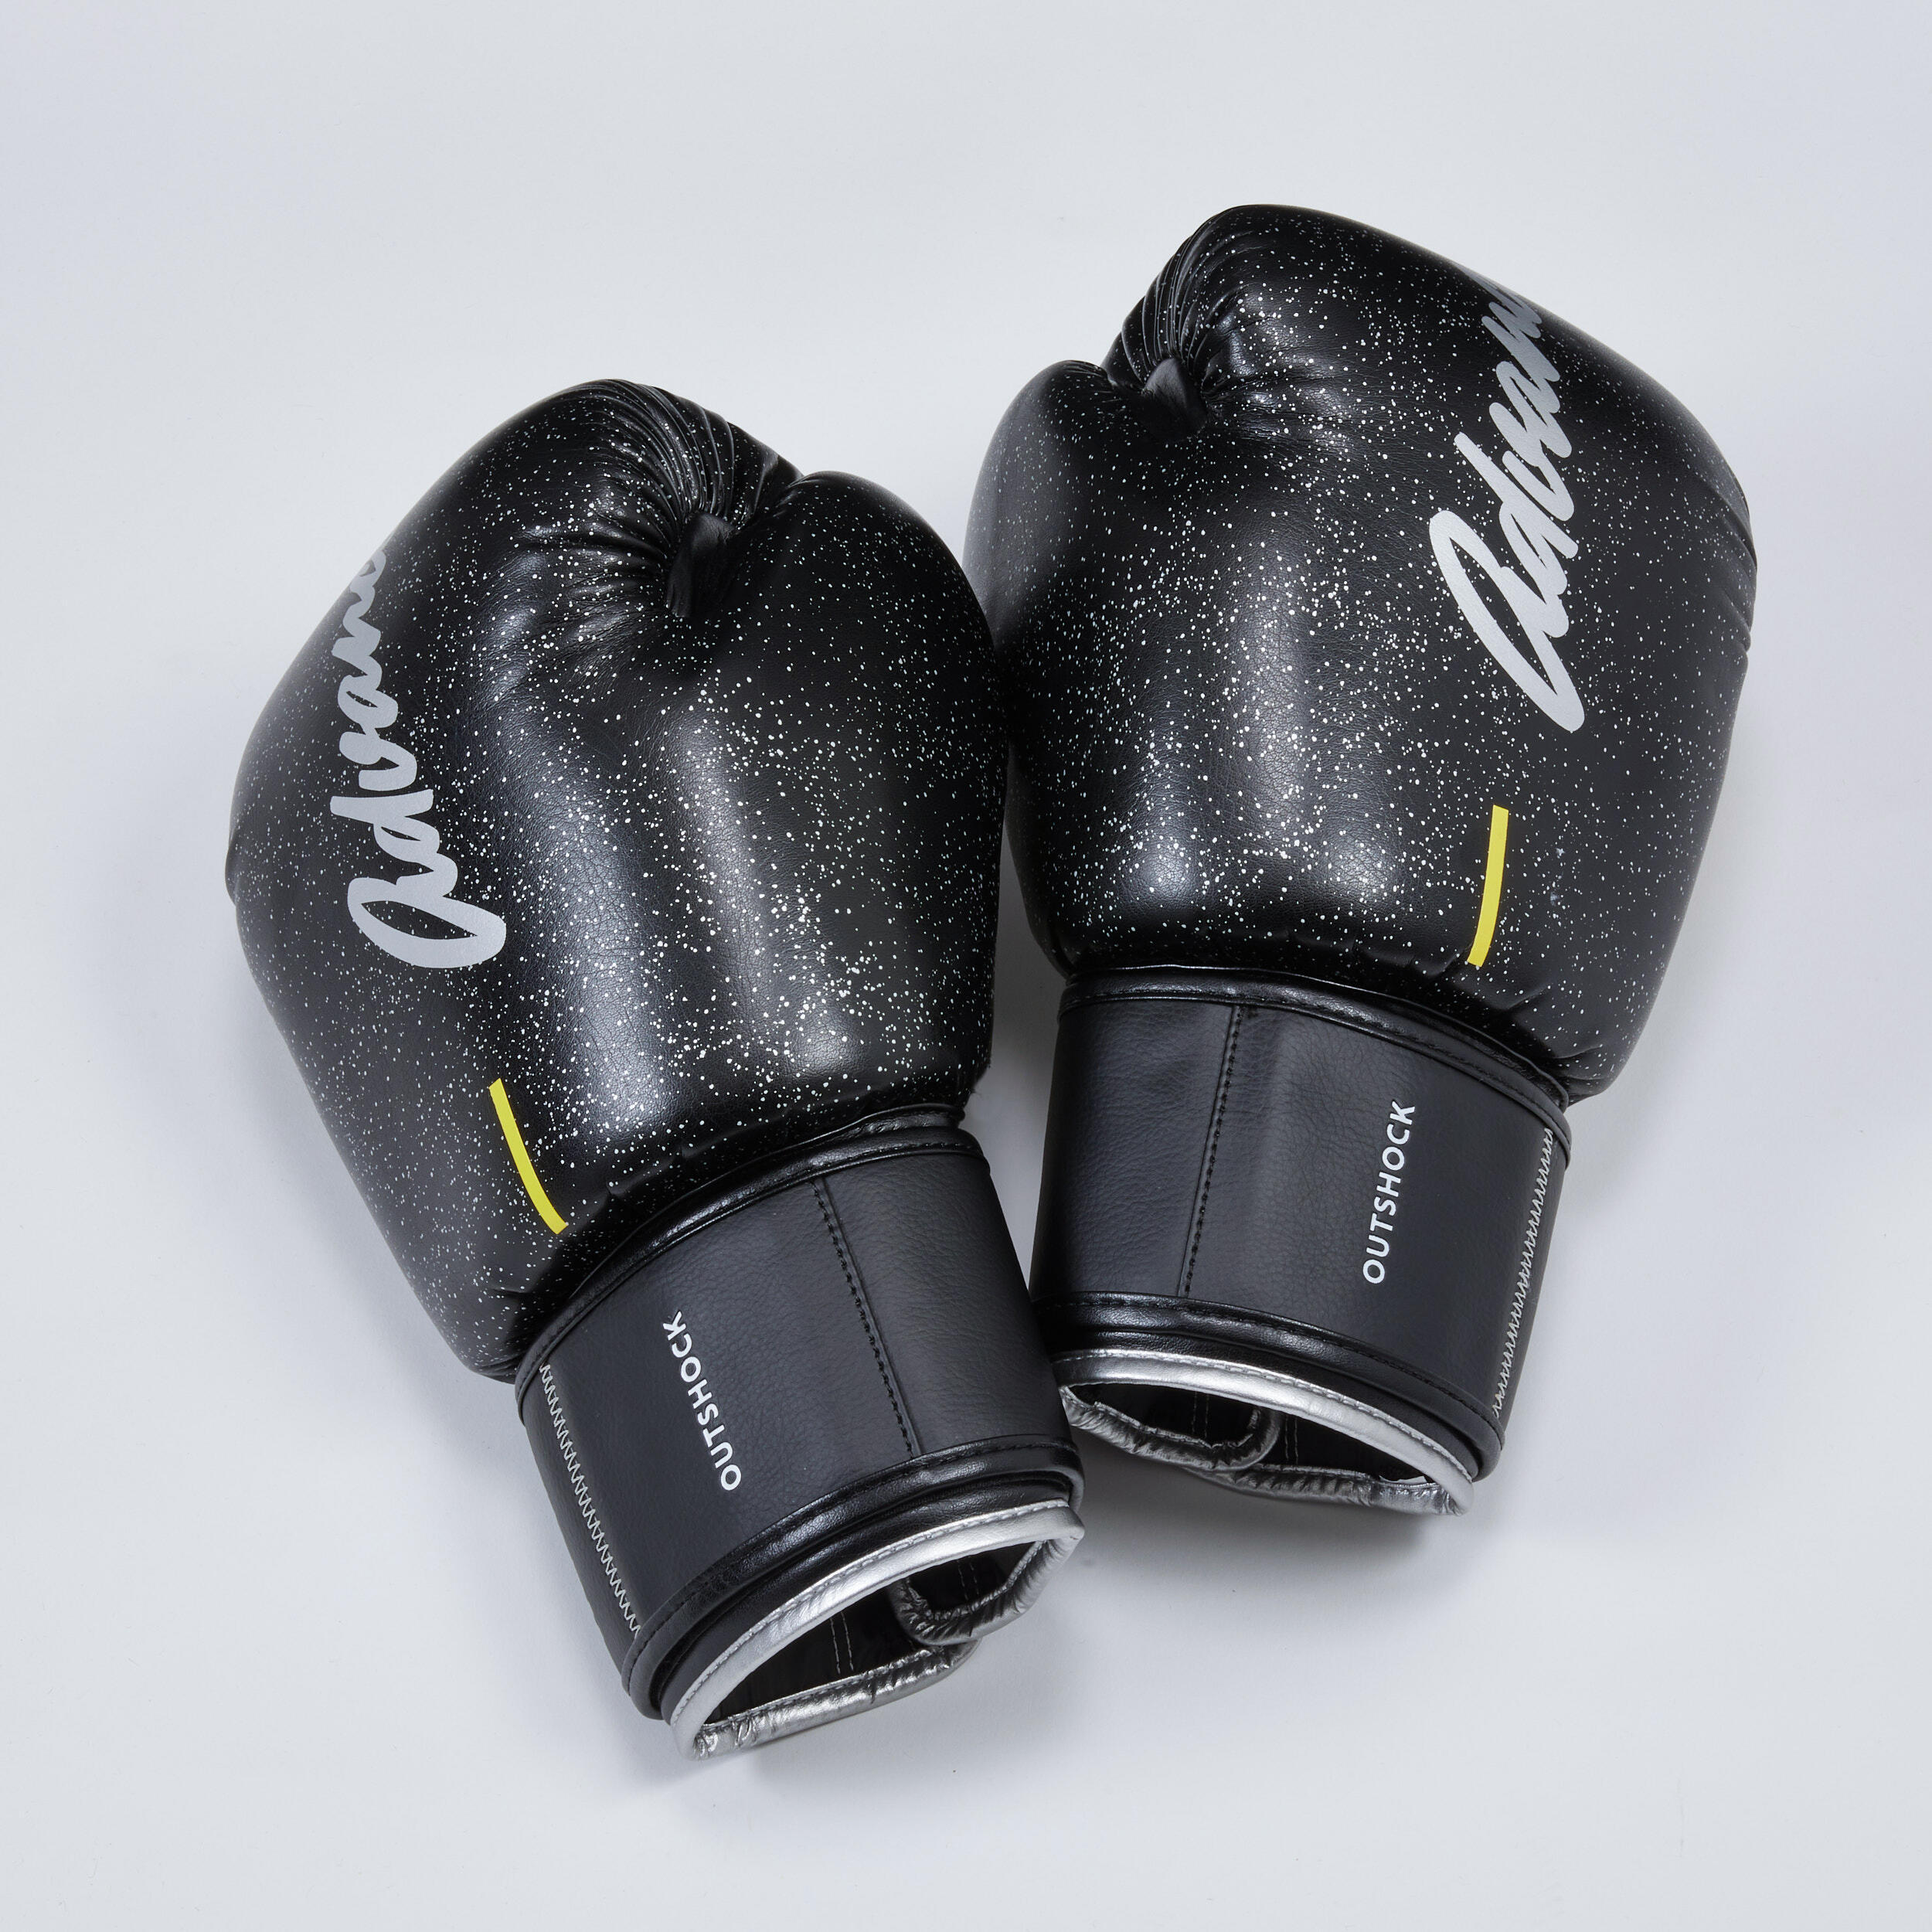 Kickboxing/Muay Thai Gloves 500 - Black 2/7